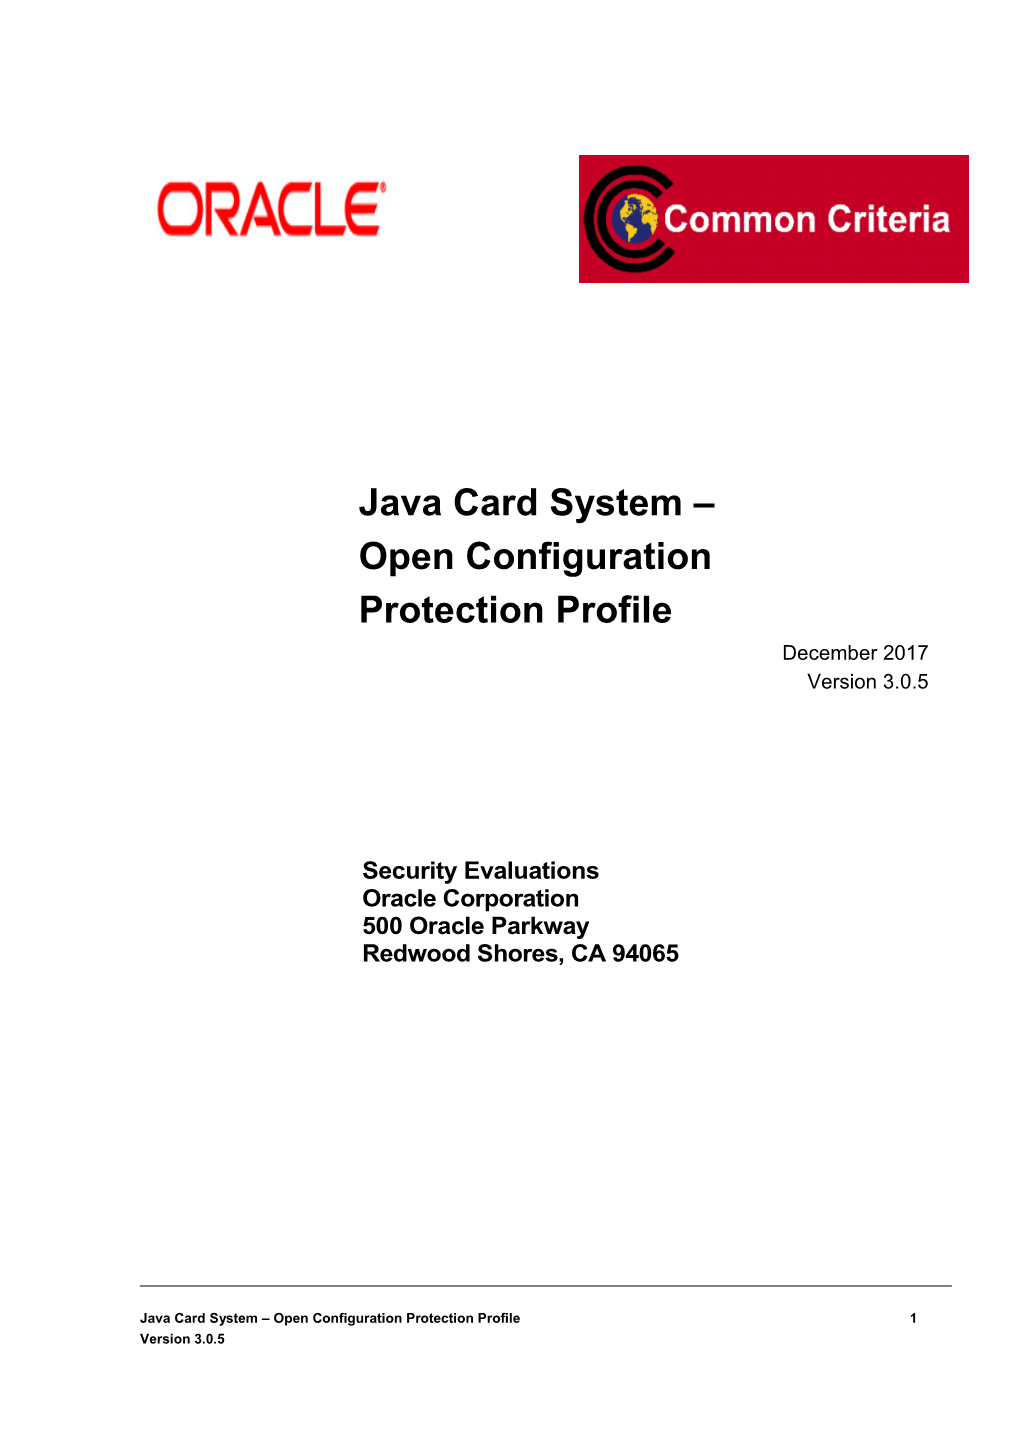 Java Card Protection Profile – Open Configuration Version 3.0.5